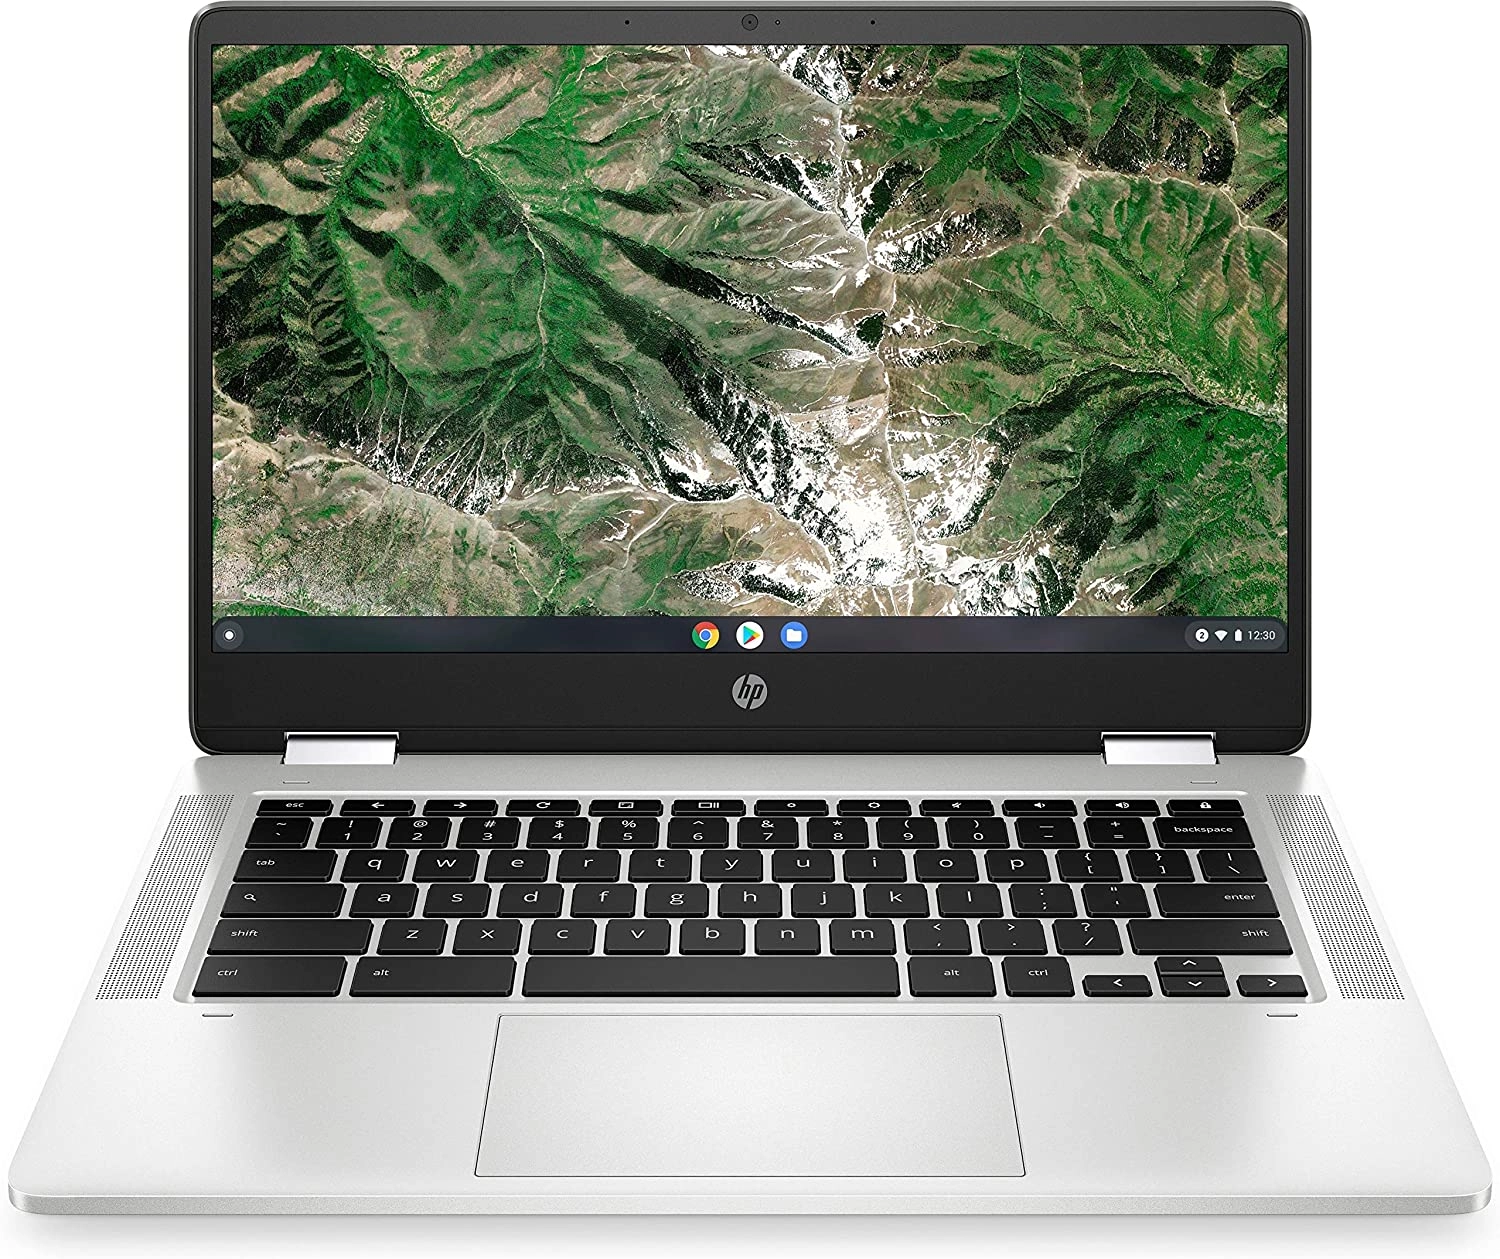 HP 14a-ca0003ns laptop image